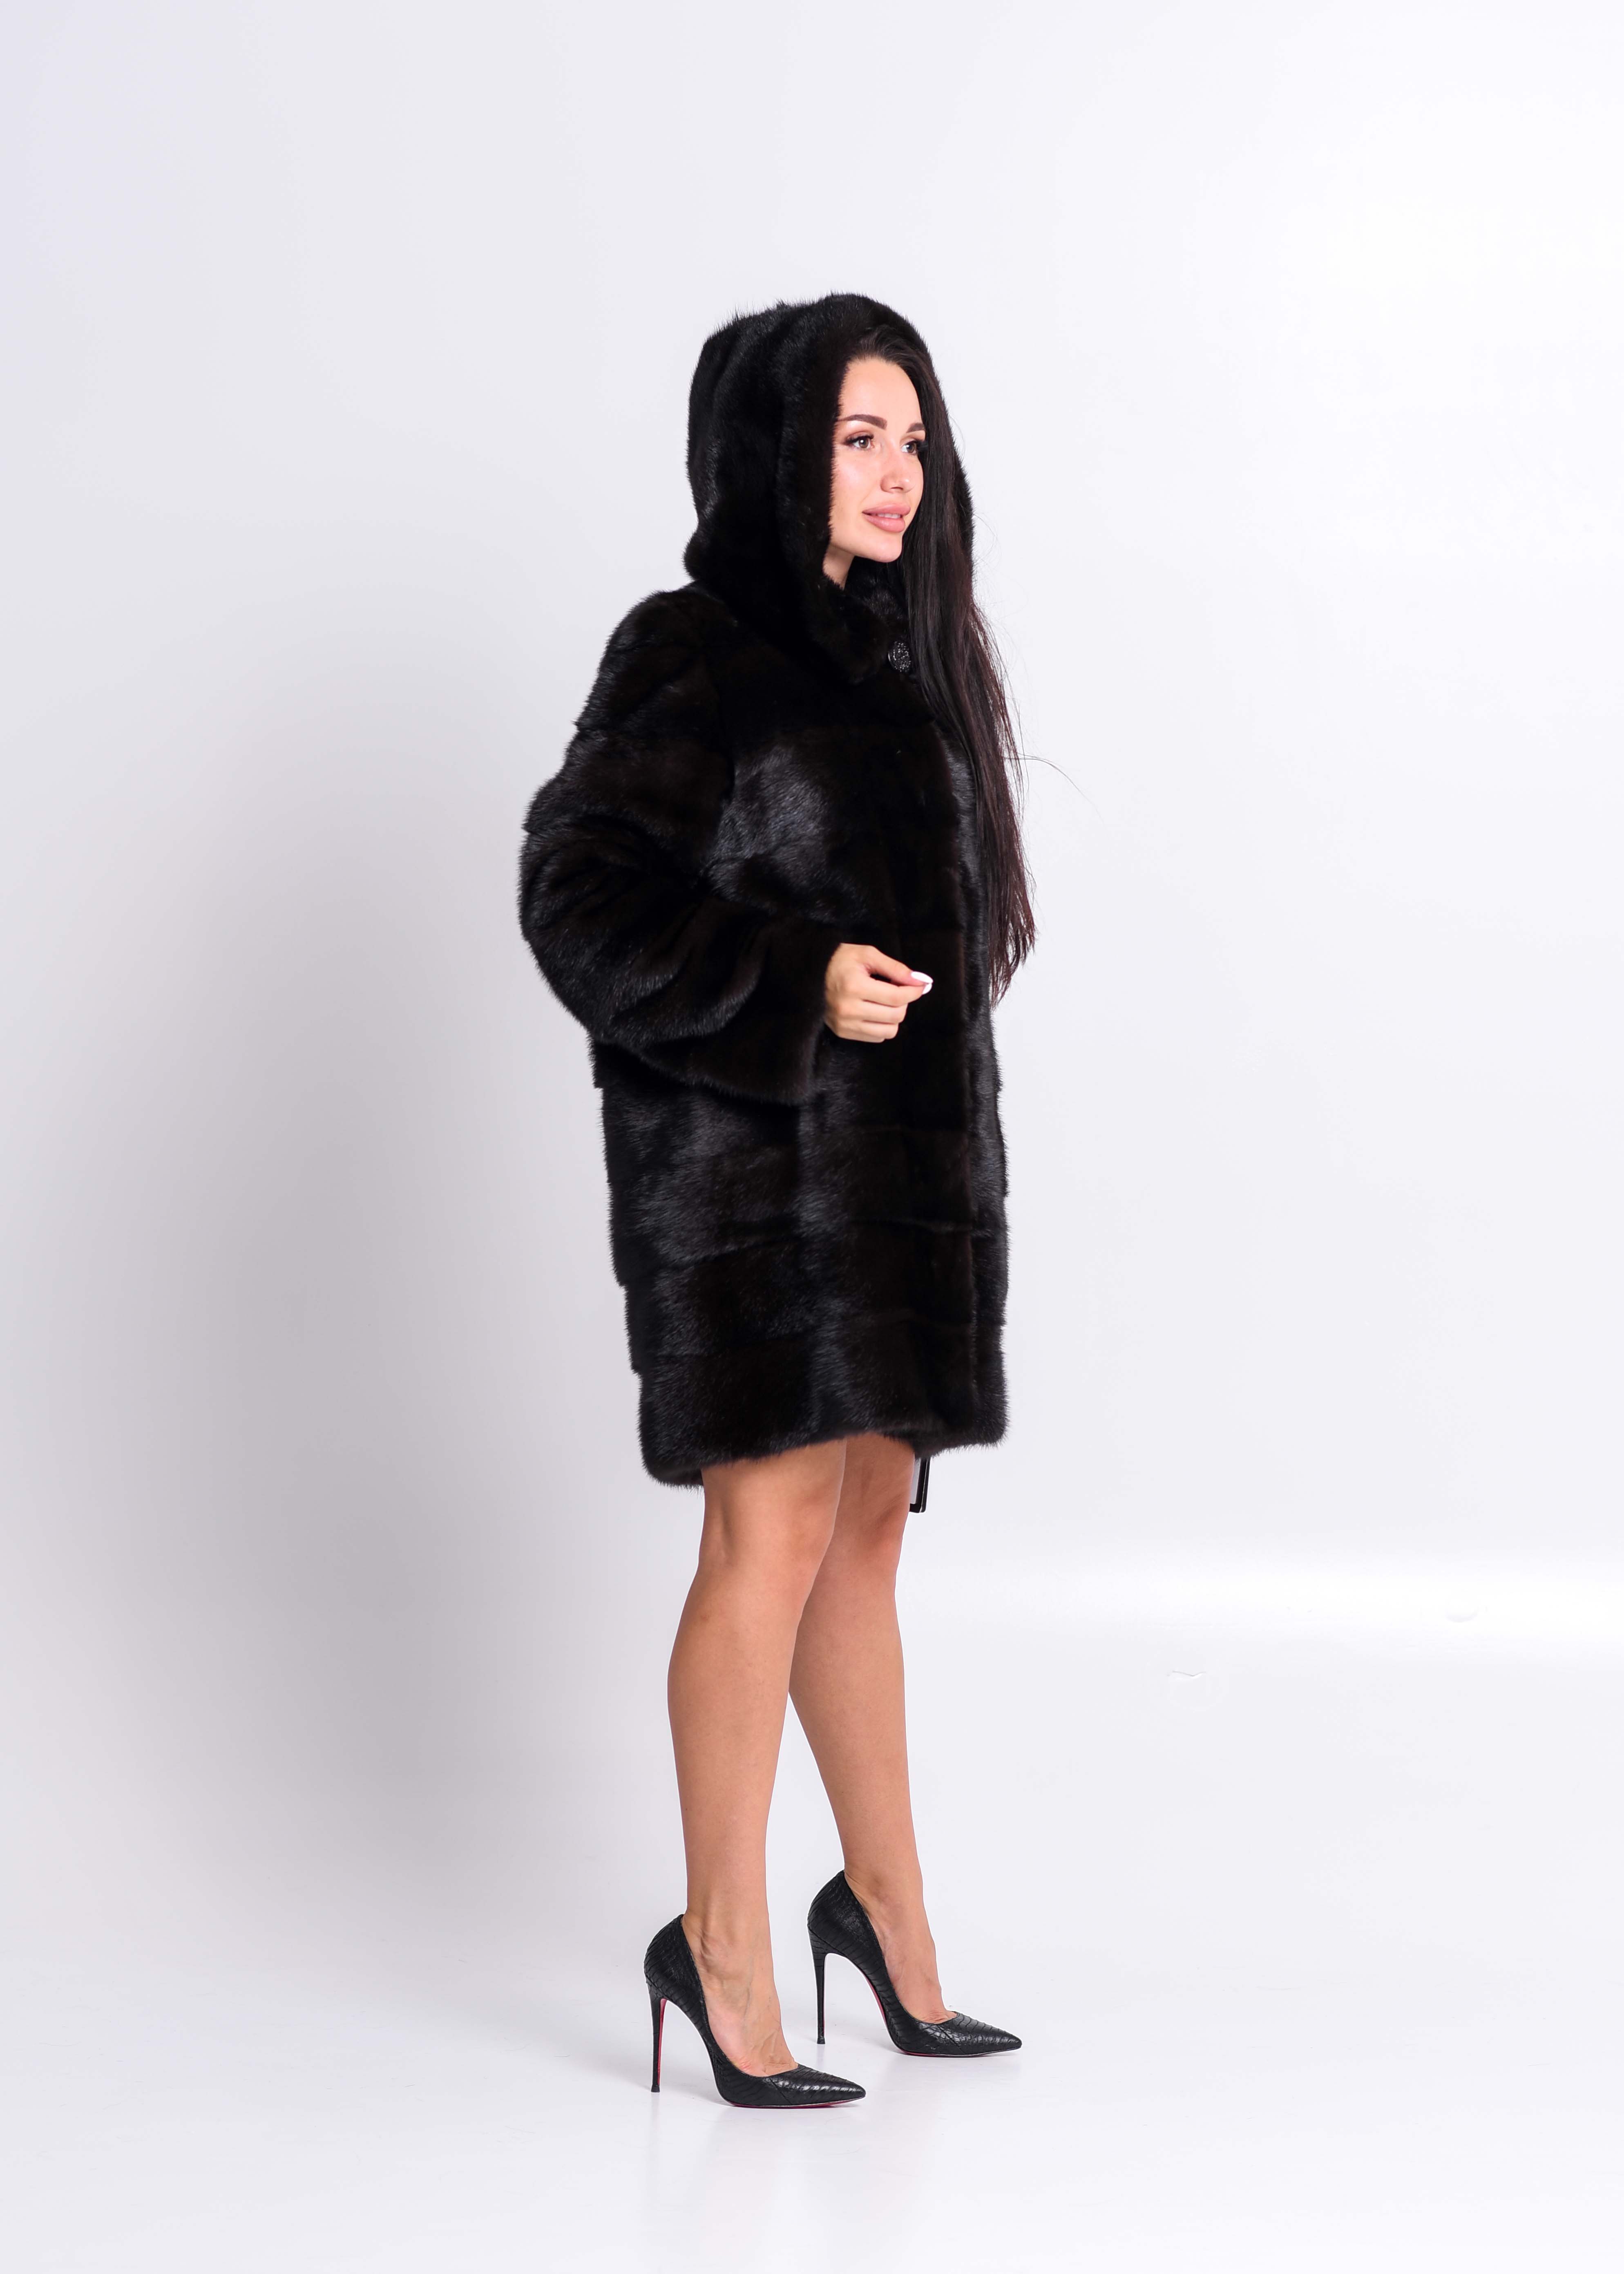 Mink coat with a hood, royal fur